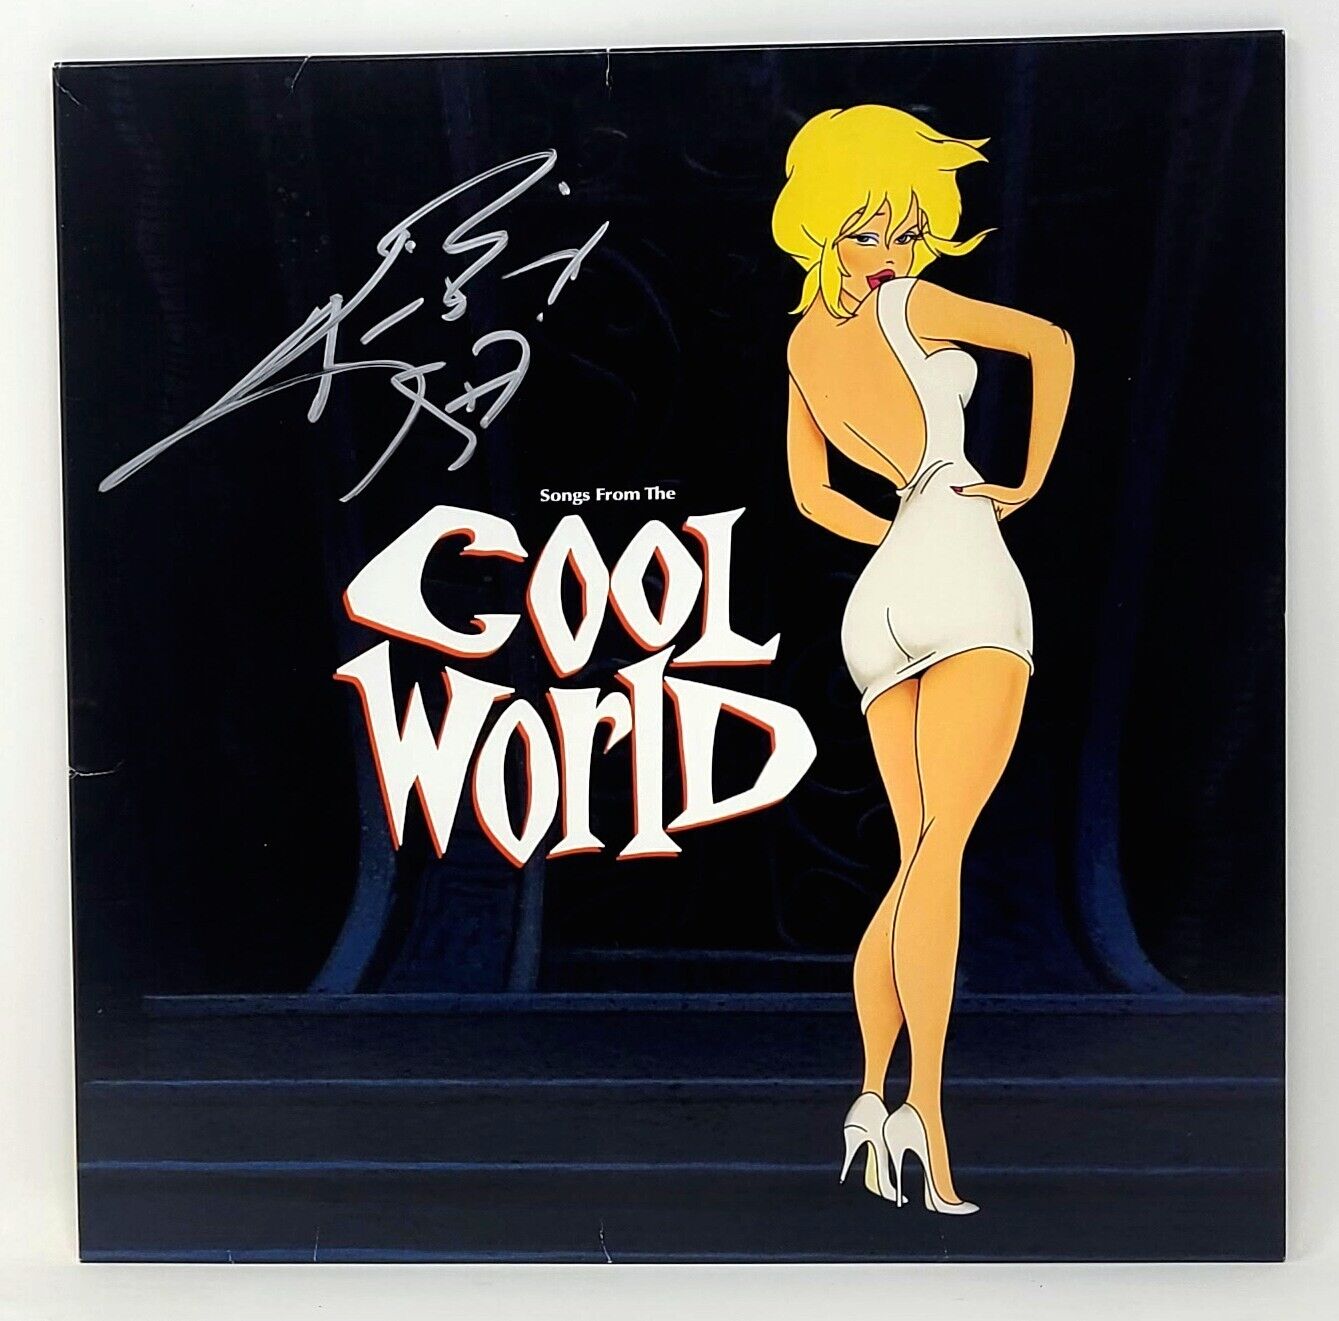 KIM BASINGER Signed Cool World Movie Soundtrack Album w/ Vinyl 